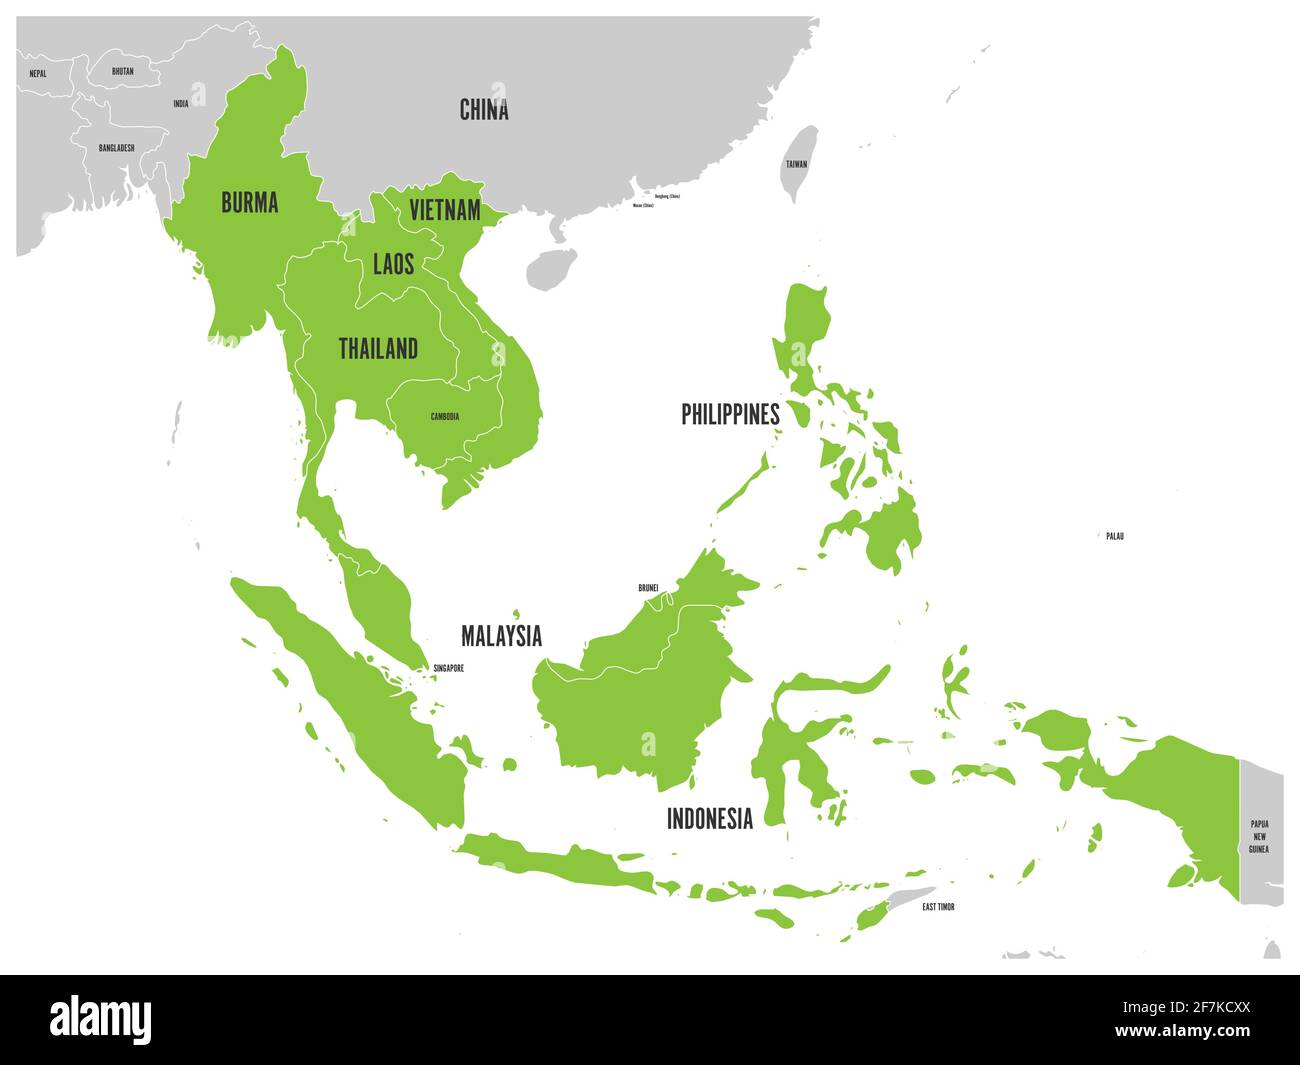 ASEAN Economic Community, AEC, MAP. Graue Karte mit grün hervorgehobenen Mitgliedsländern, Südostasien. Vektorgrafik Stock Vektor